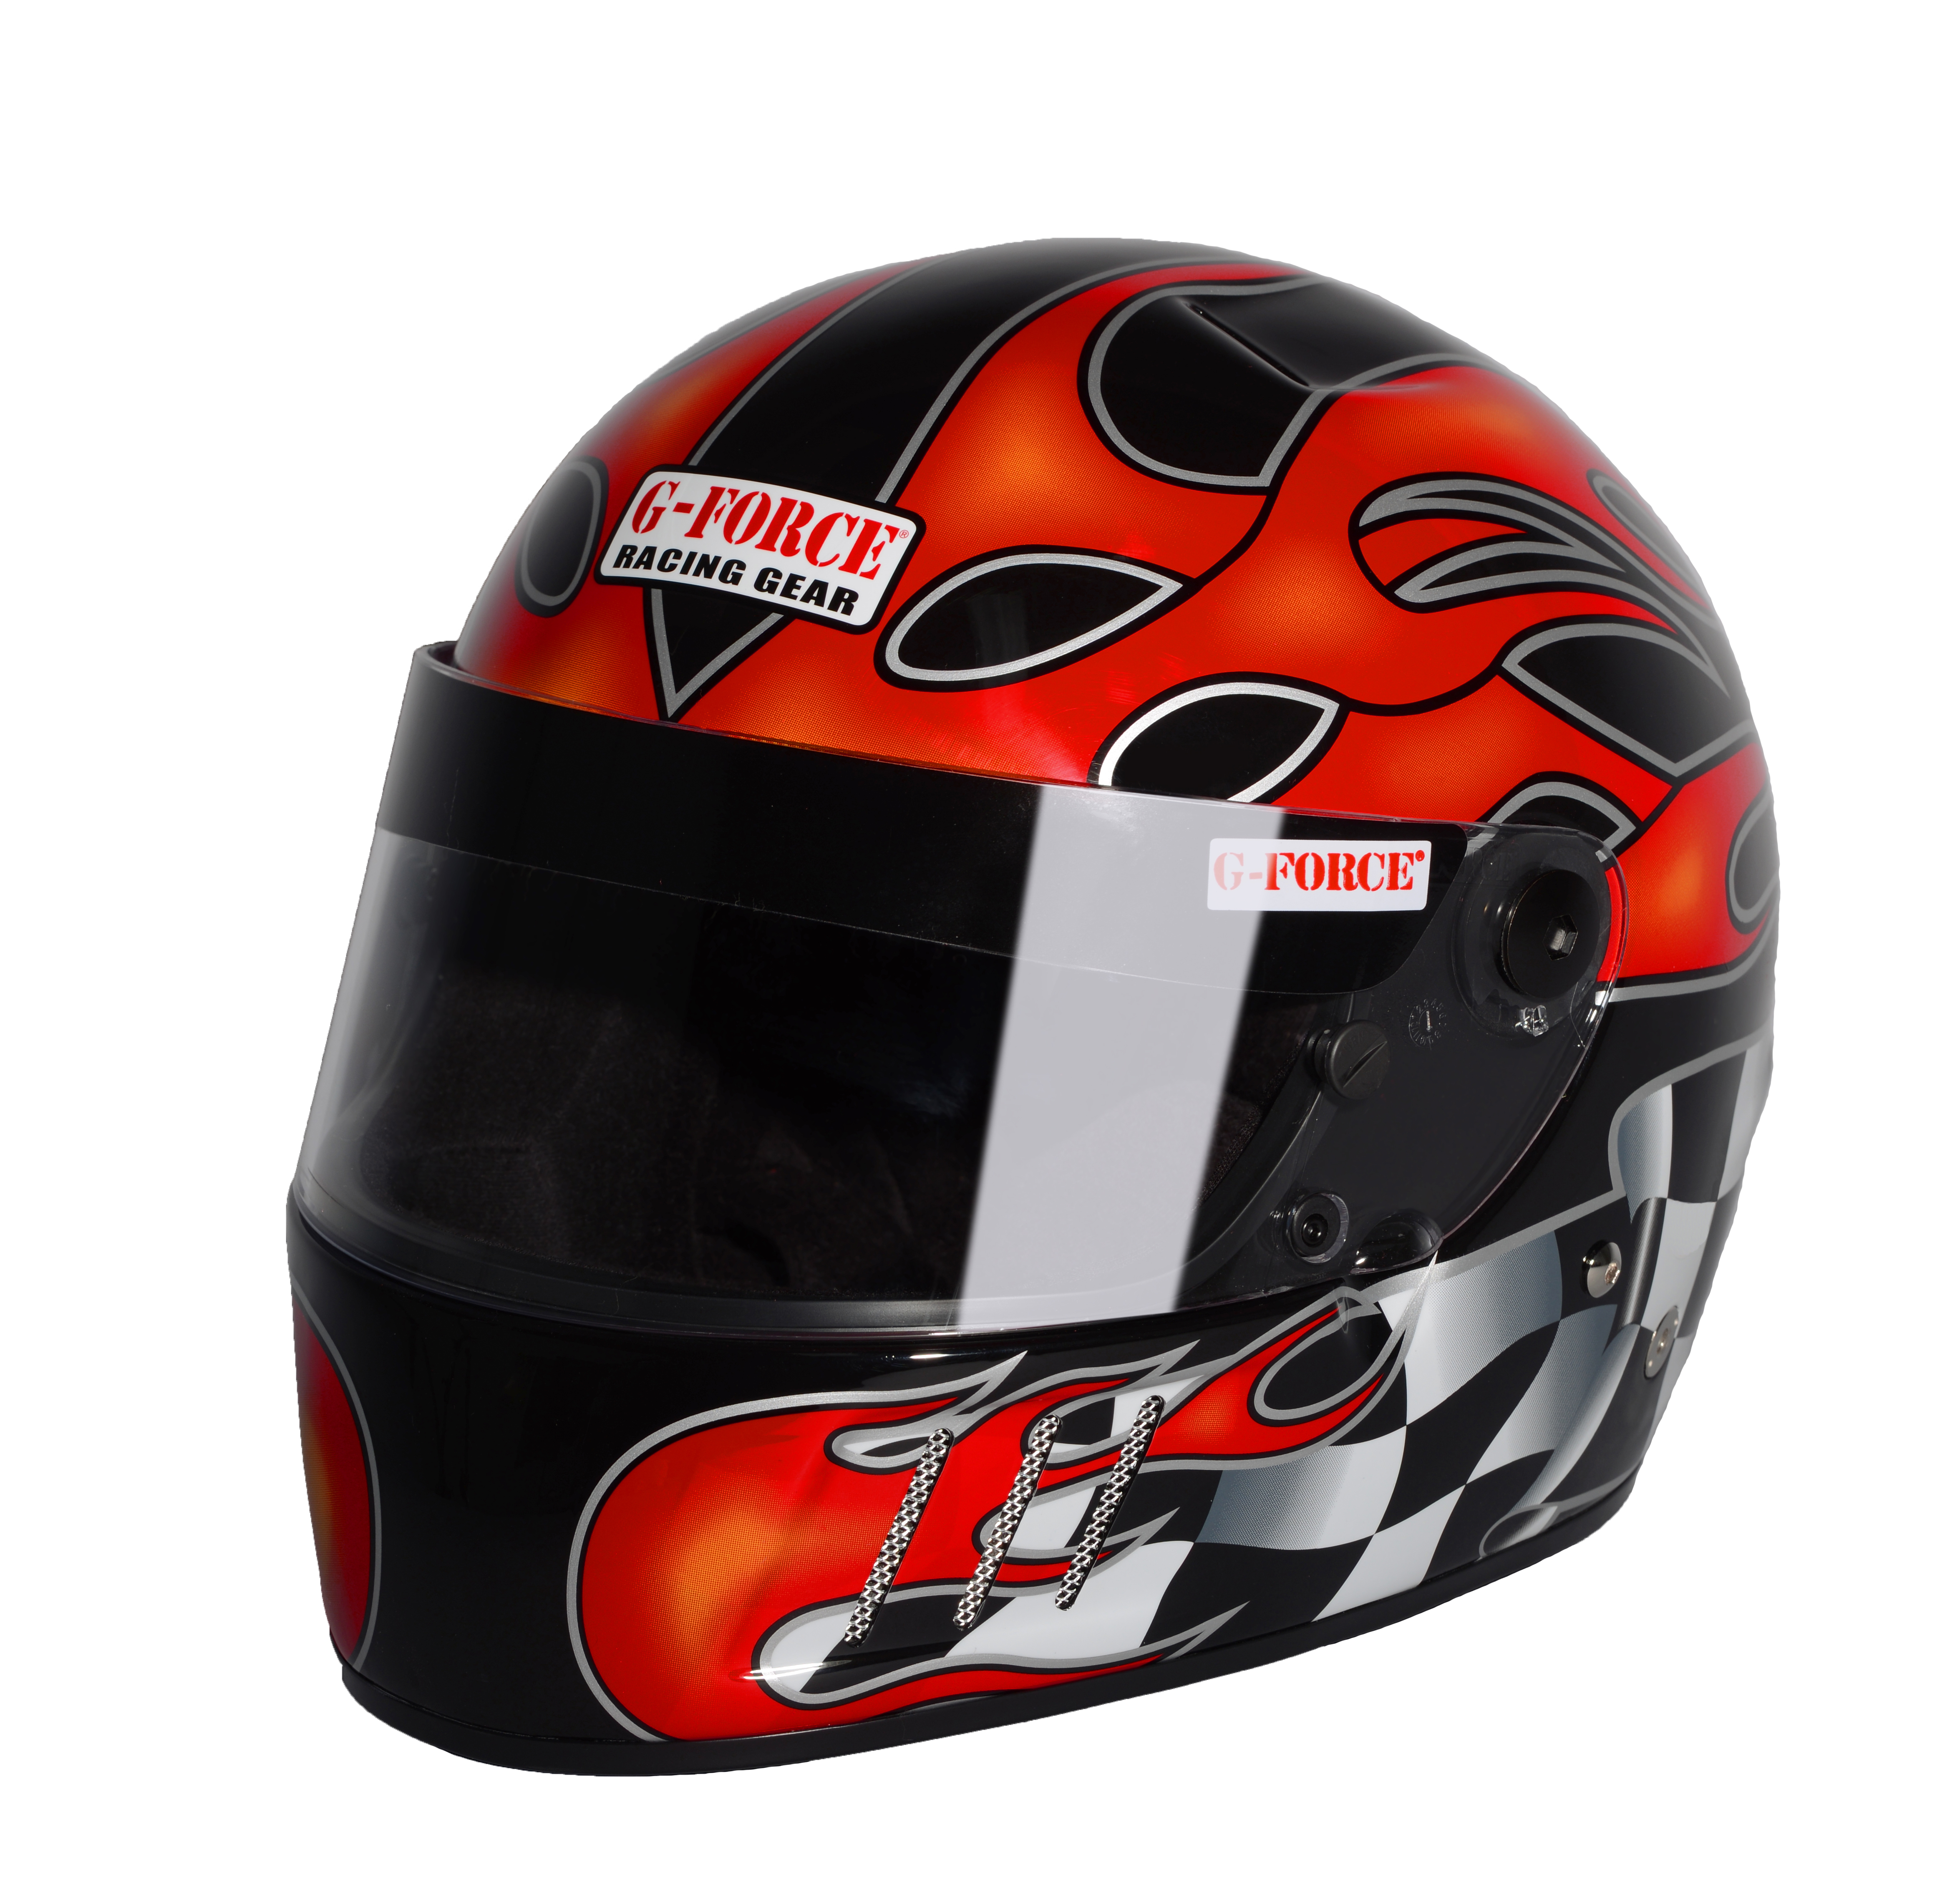 G-Force Racing Gear Helmet, PRO VINTAGE SA2010 FULL FACE LARGE MATTE